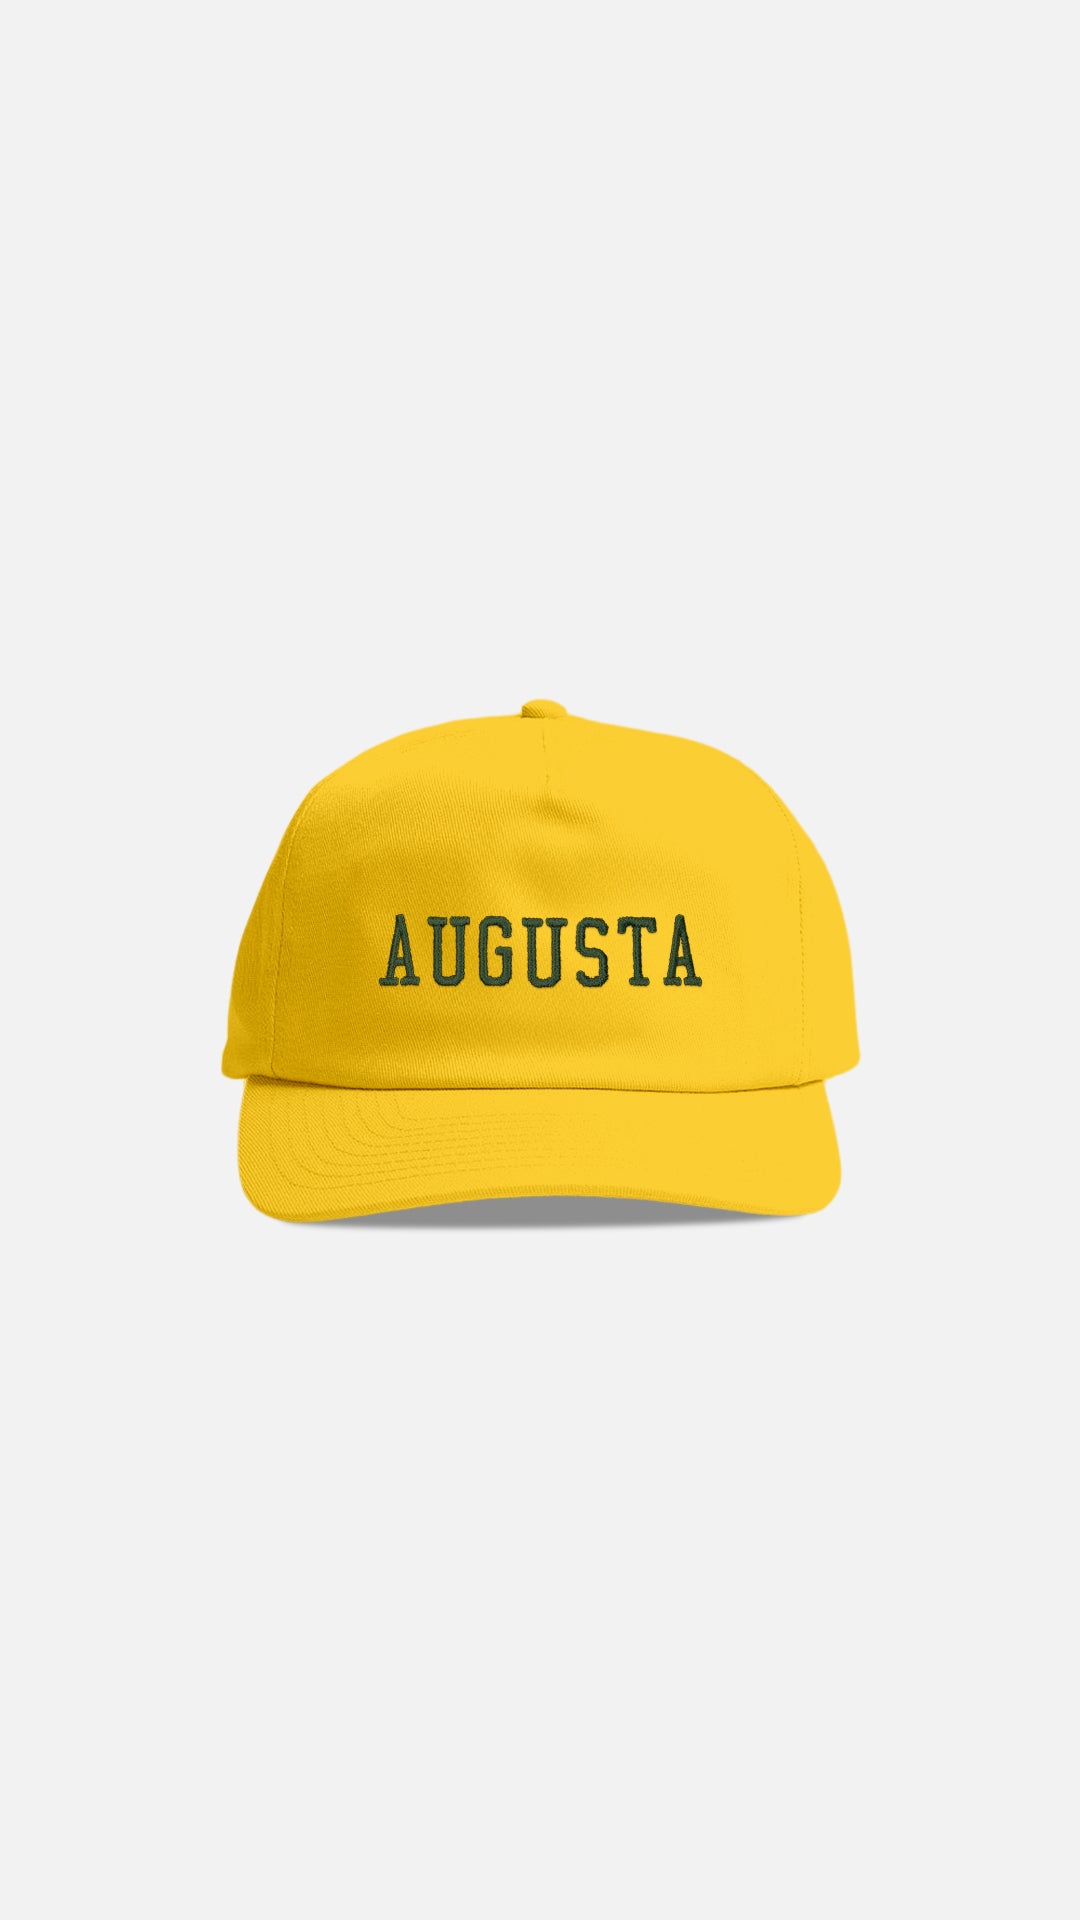 Augusta Snapback Yellow